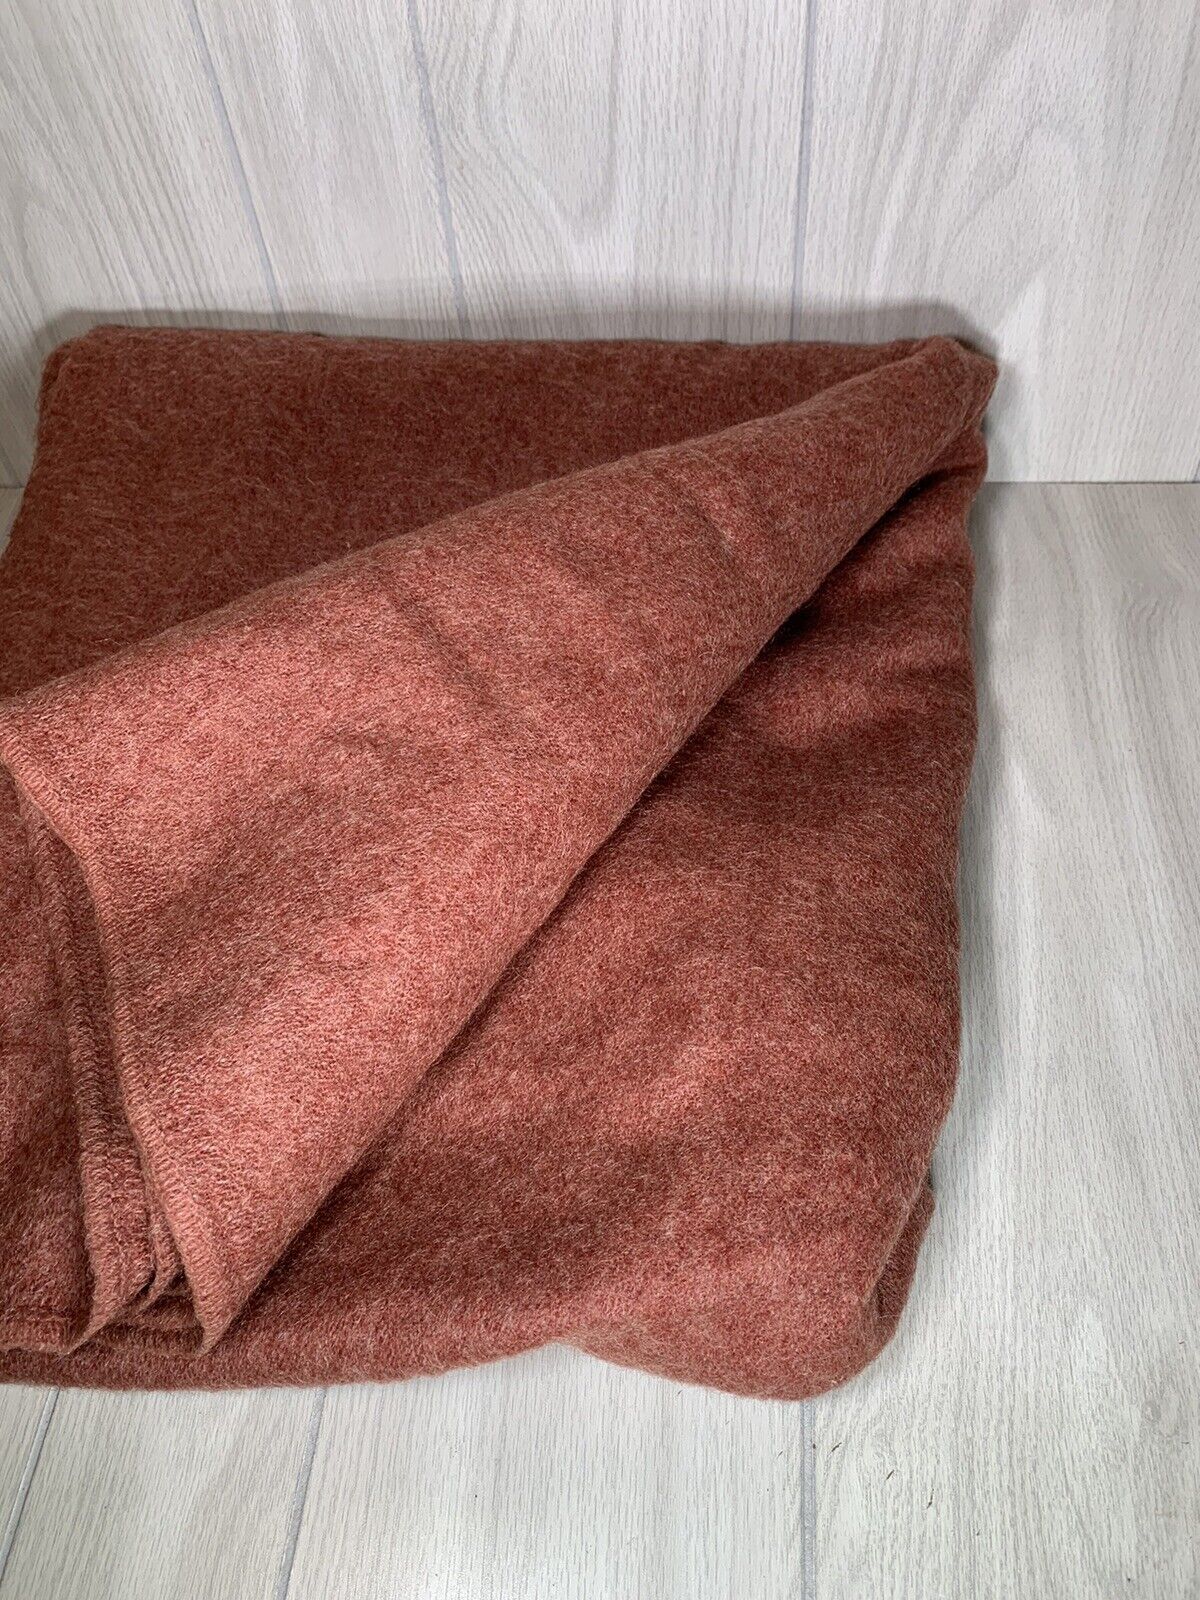 VTG Kenwood Ramcrest Wool Blanket Rust Color 86x74 Twin Size